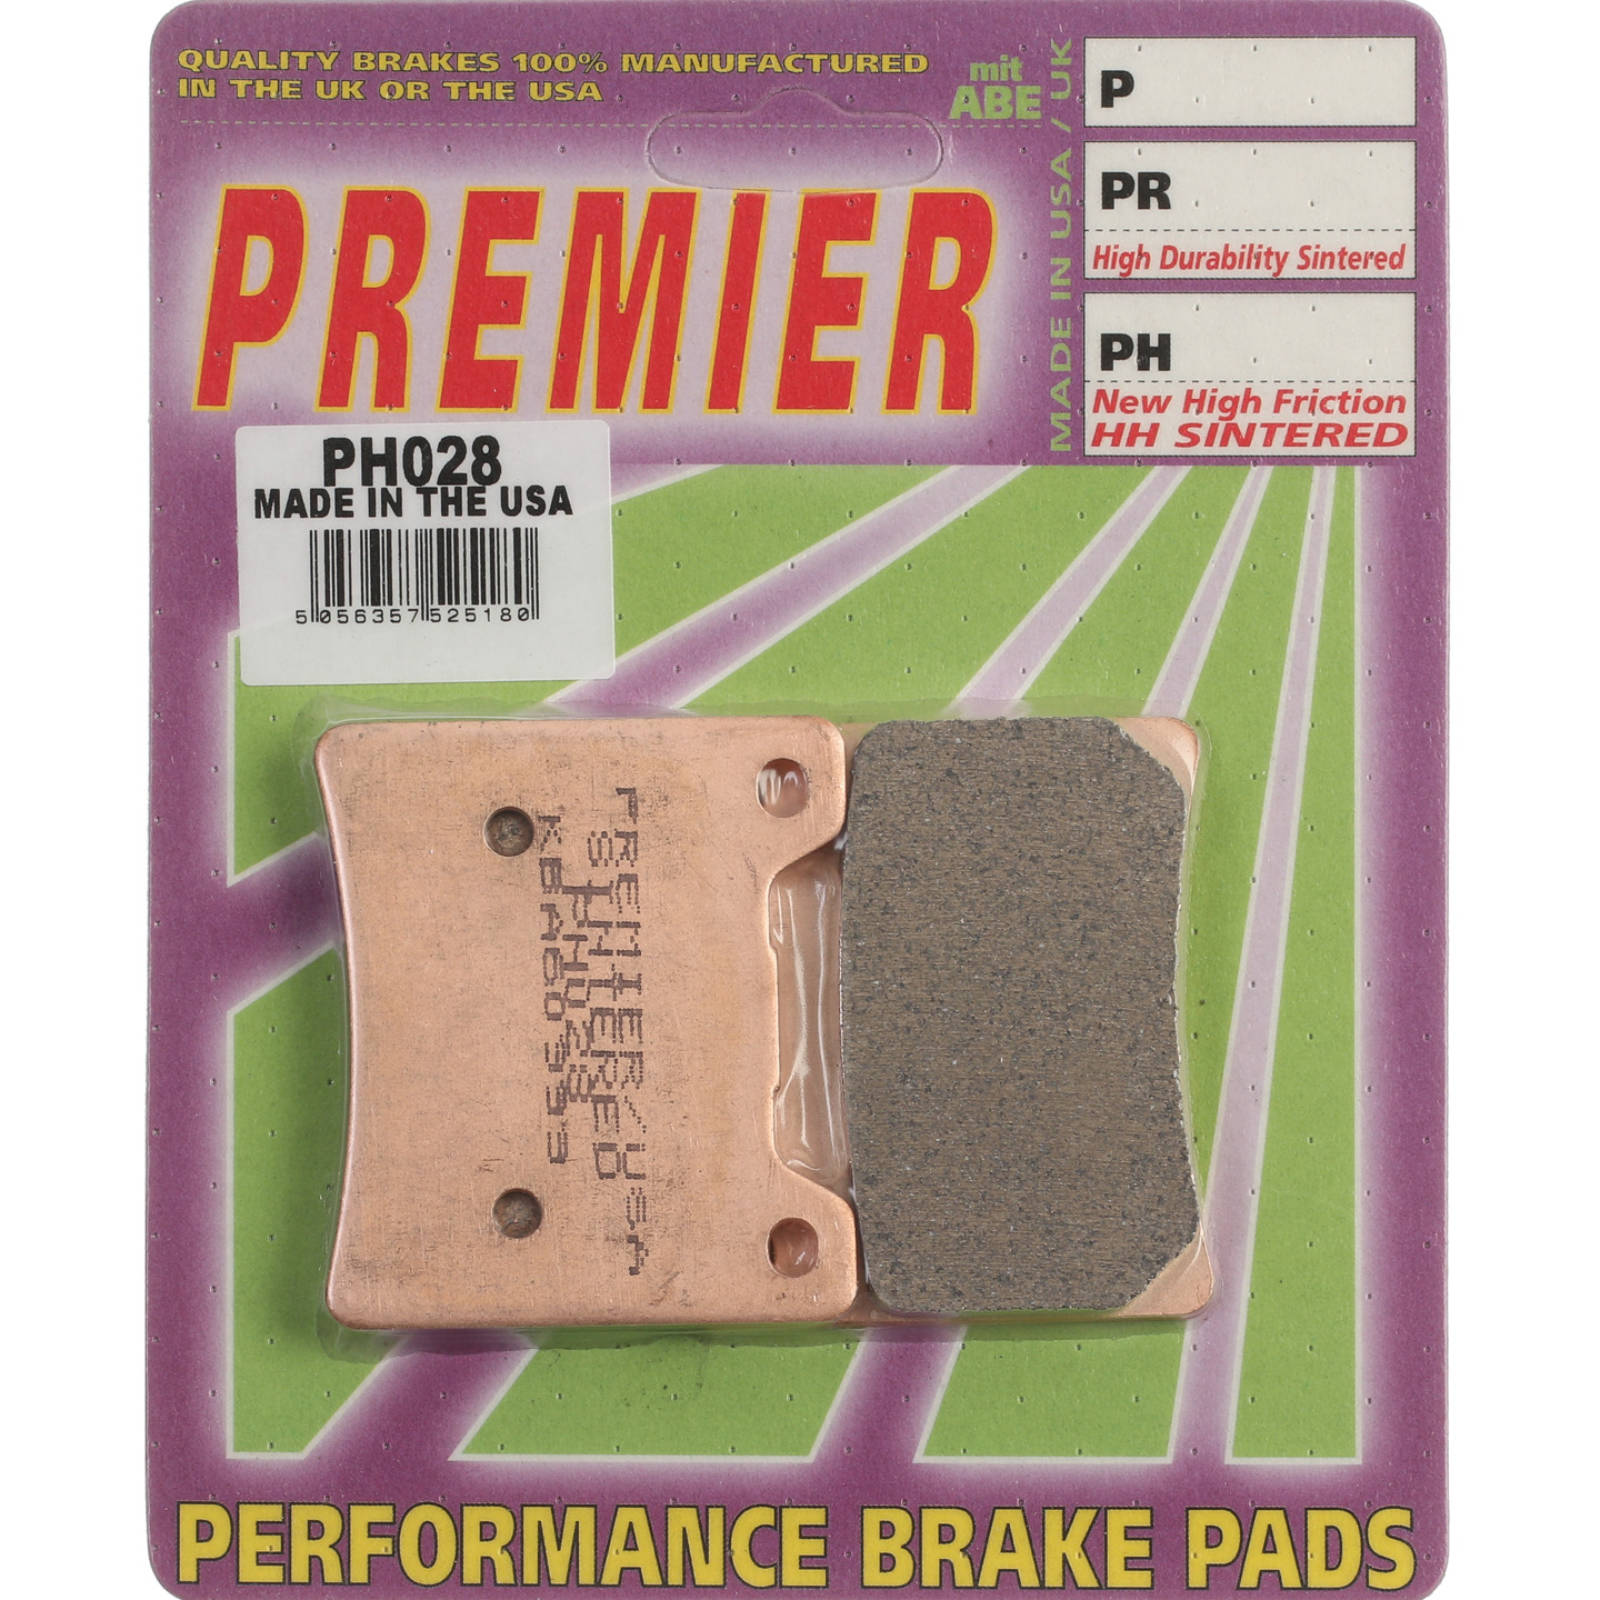 New PREMIER Brake Pad - PH Street Sintered (GF015S3) #PBPH28